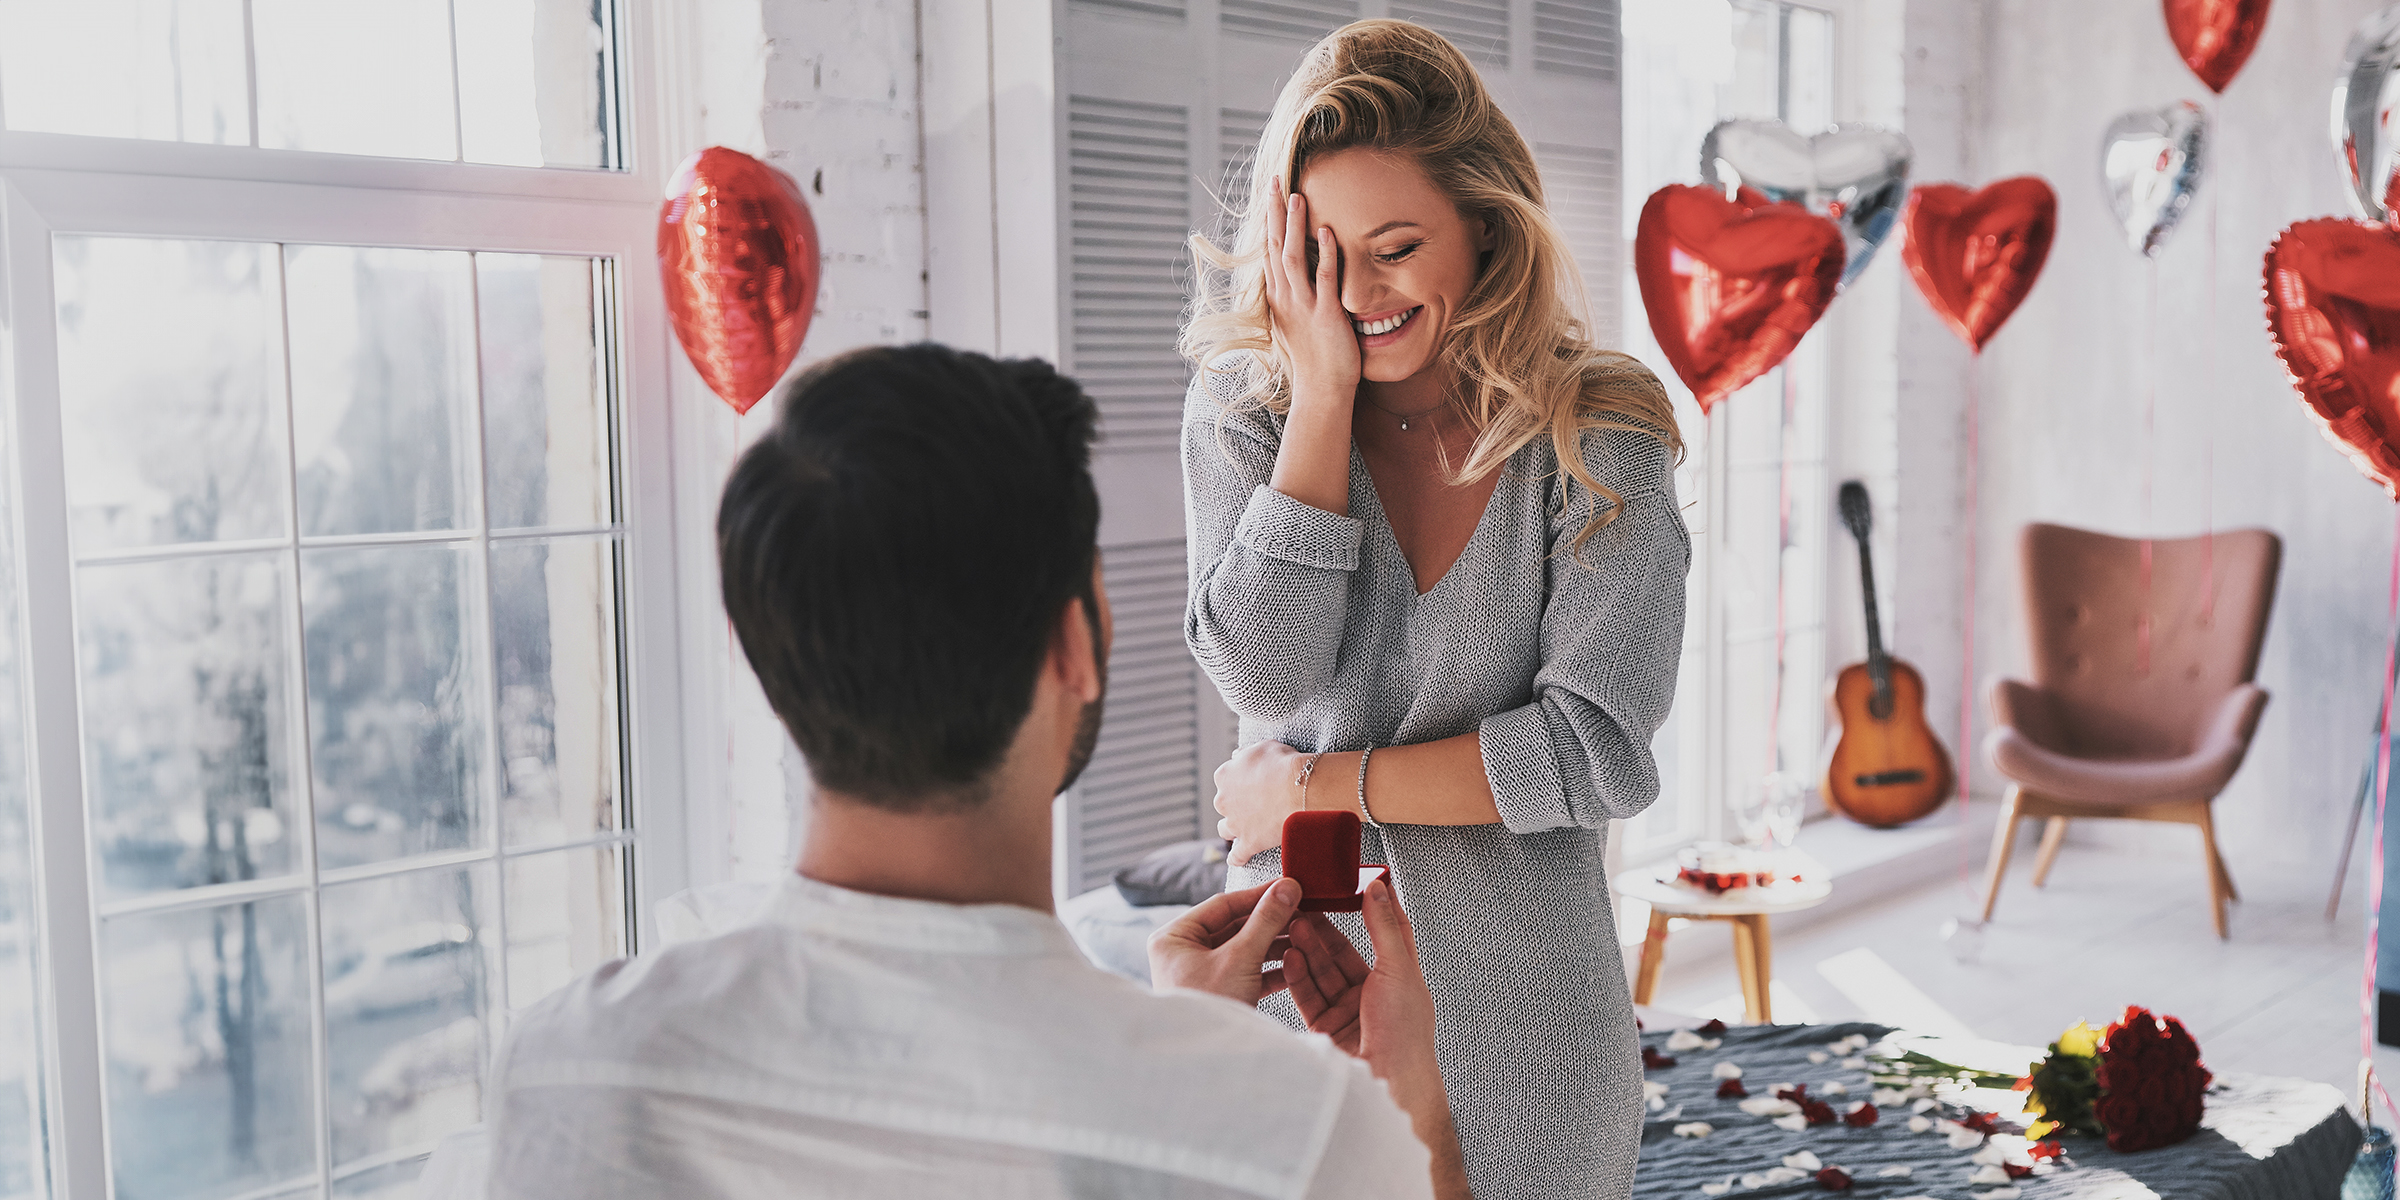 A man proposing to his girlfriend | Source: Shutterstock